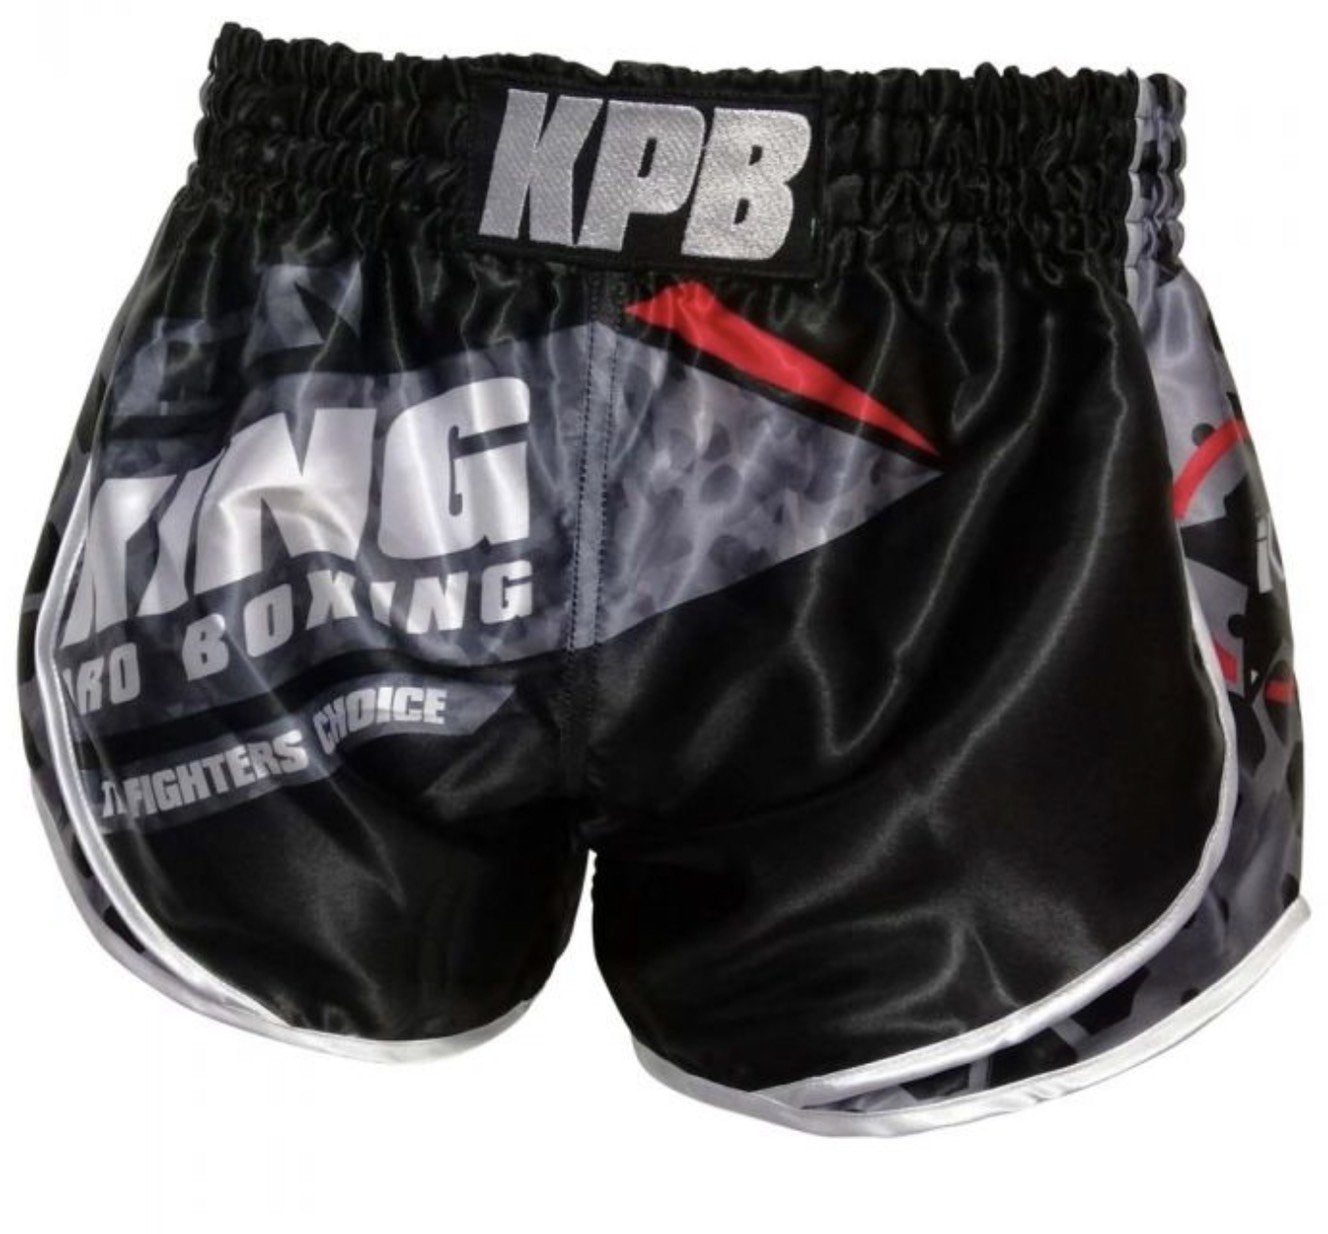 Buy online King Pro Boxing Shorts | Fairtex, Booster, Blegend, Top King ...